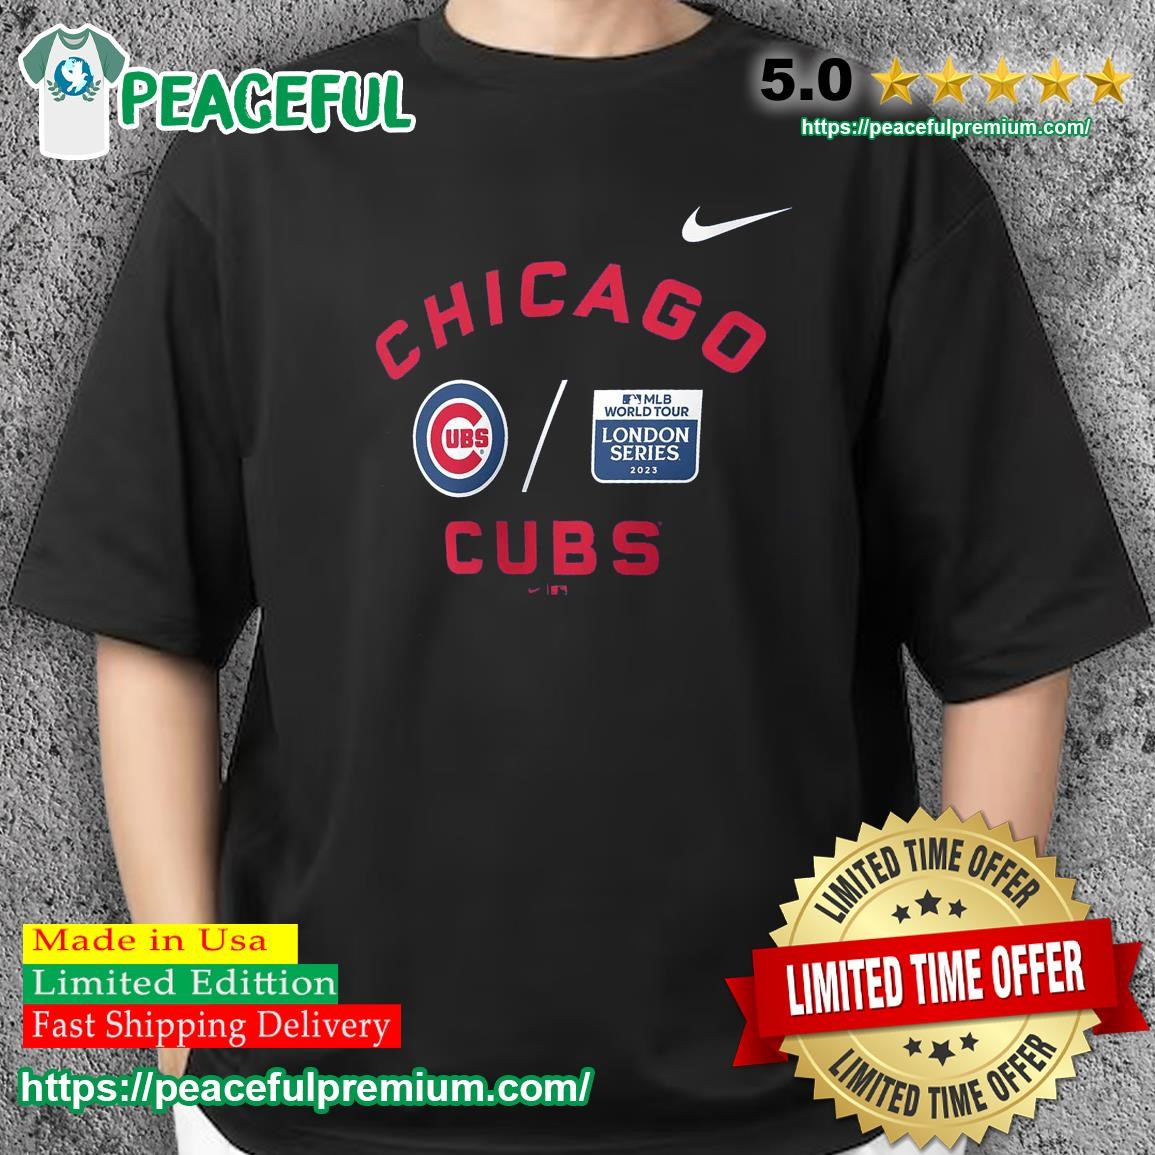 nike chicago cubs shirts